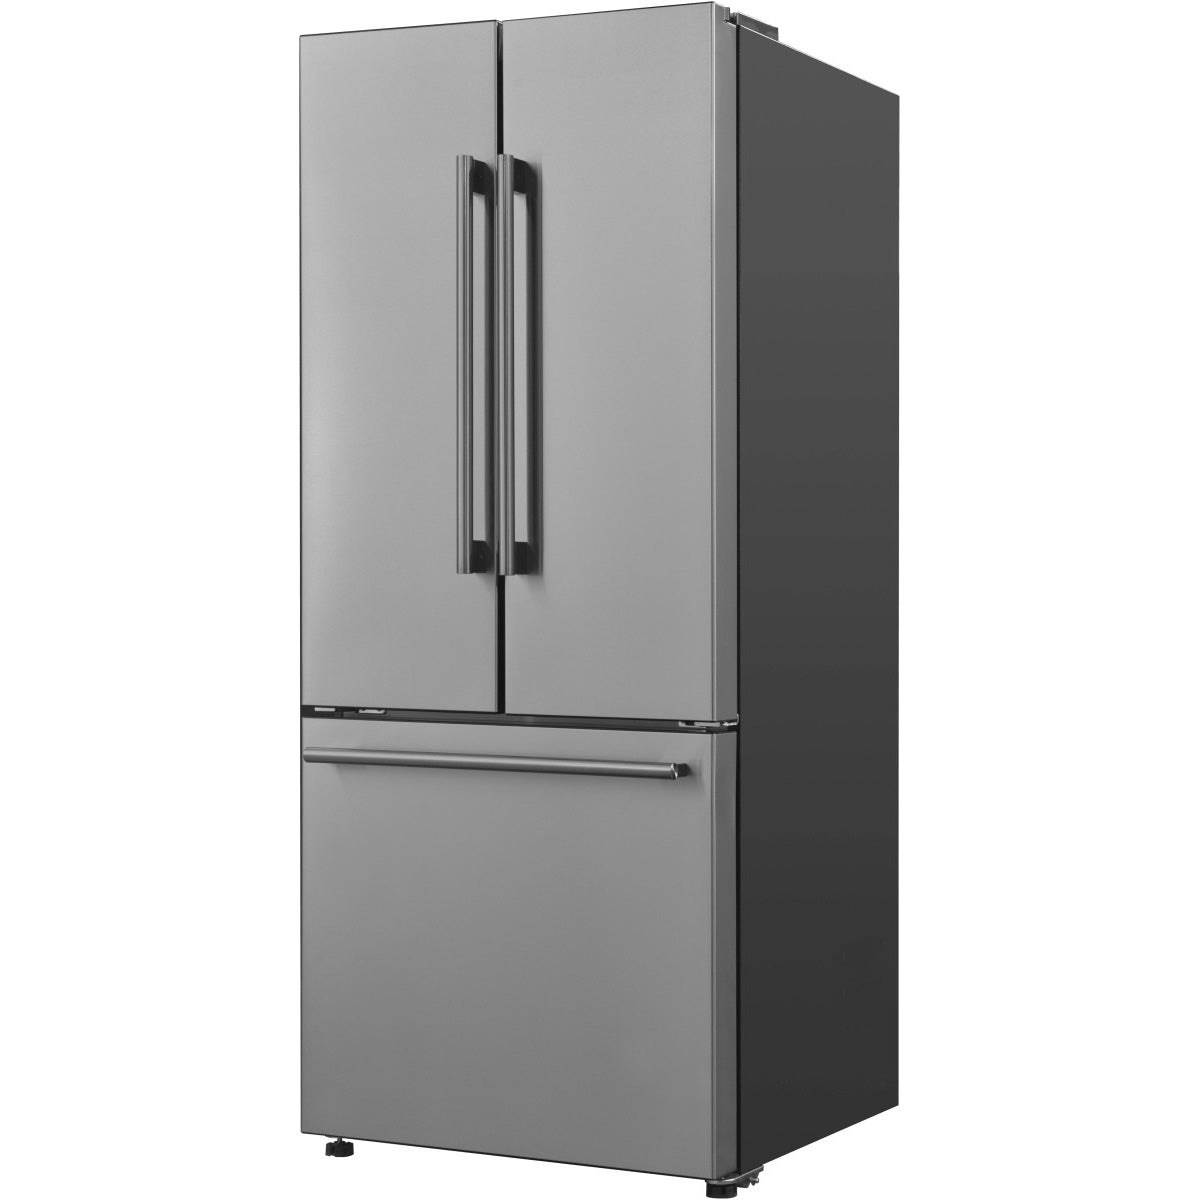 Galanz 28 in. 16 Cu. Ft. 3-Door French Door Refrigerator In Stainless Steel (GLR16FS2E16) reverse side, doors closed